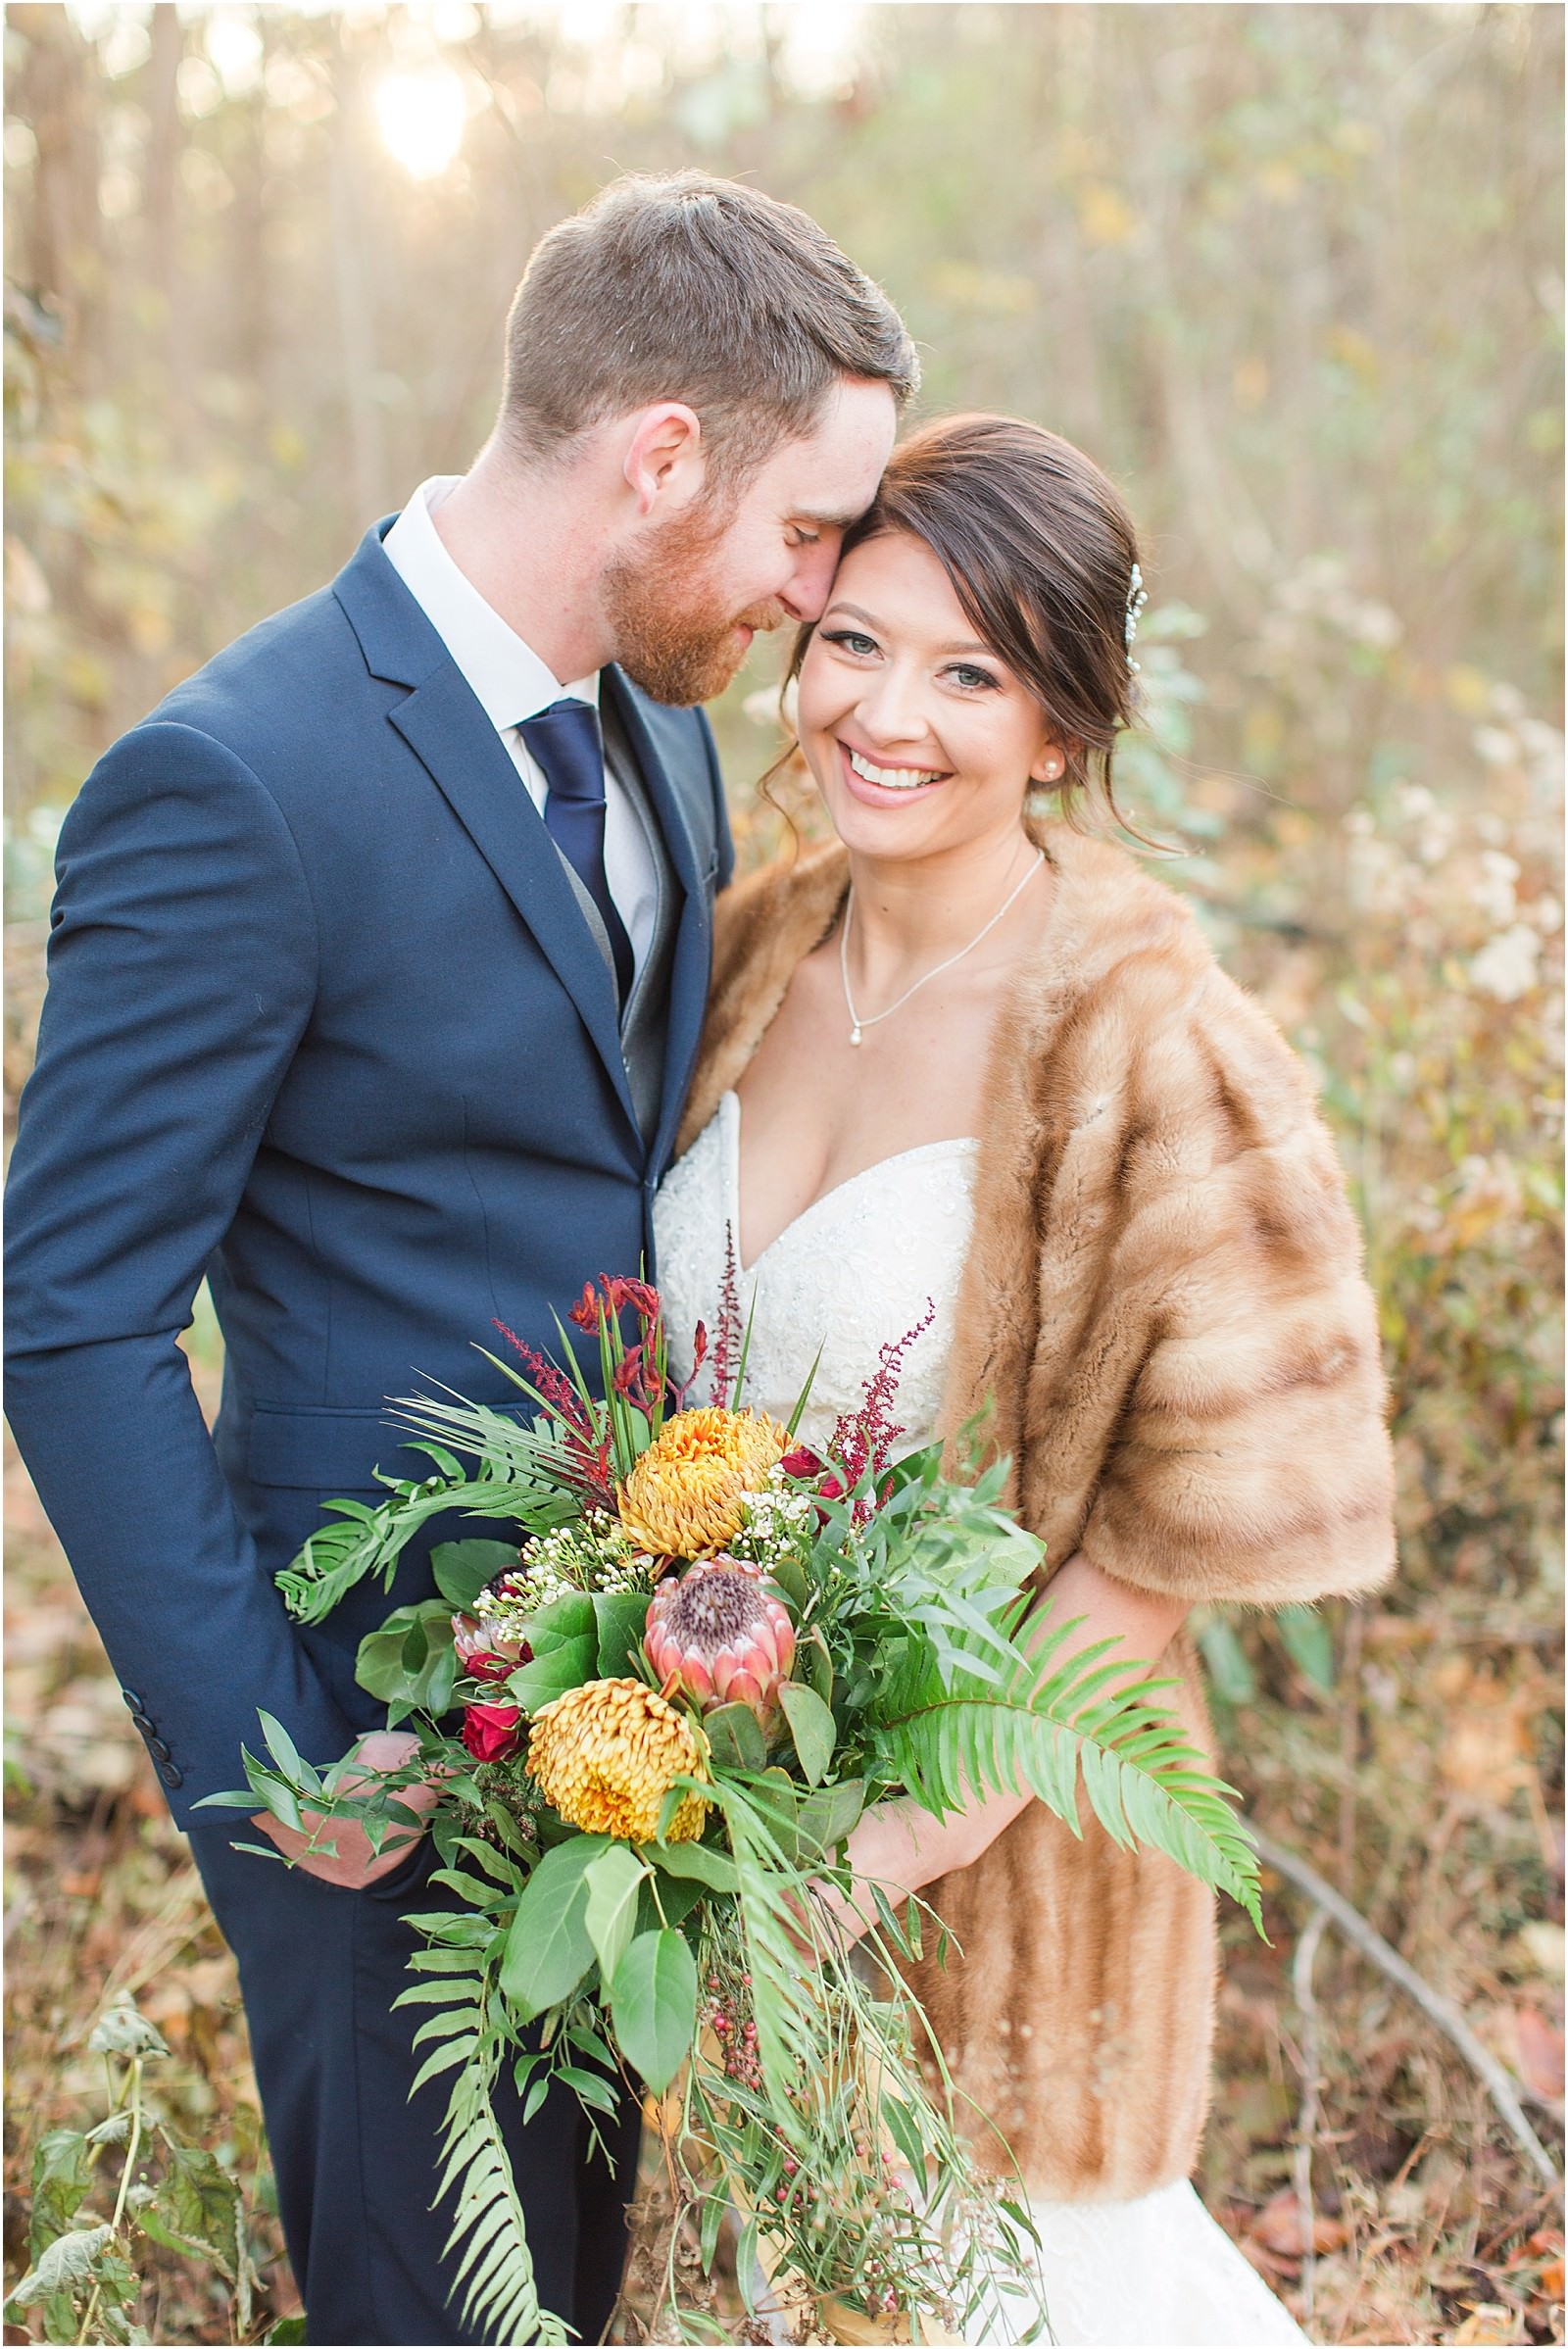 Walker and Alyssa's intimate fall wedding in Southern Indiana. | Wedding Photography | The Corner House Wedding | Southern Indiana Wedding | #fallwedding #intimatewedding | 078.jpg